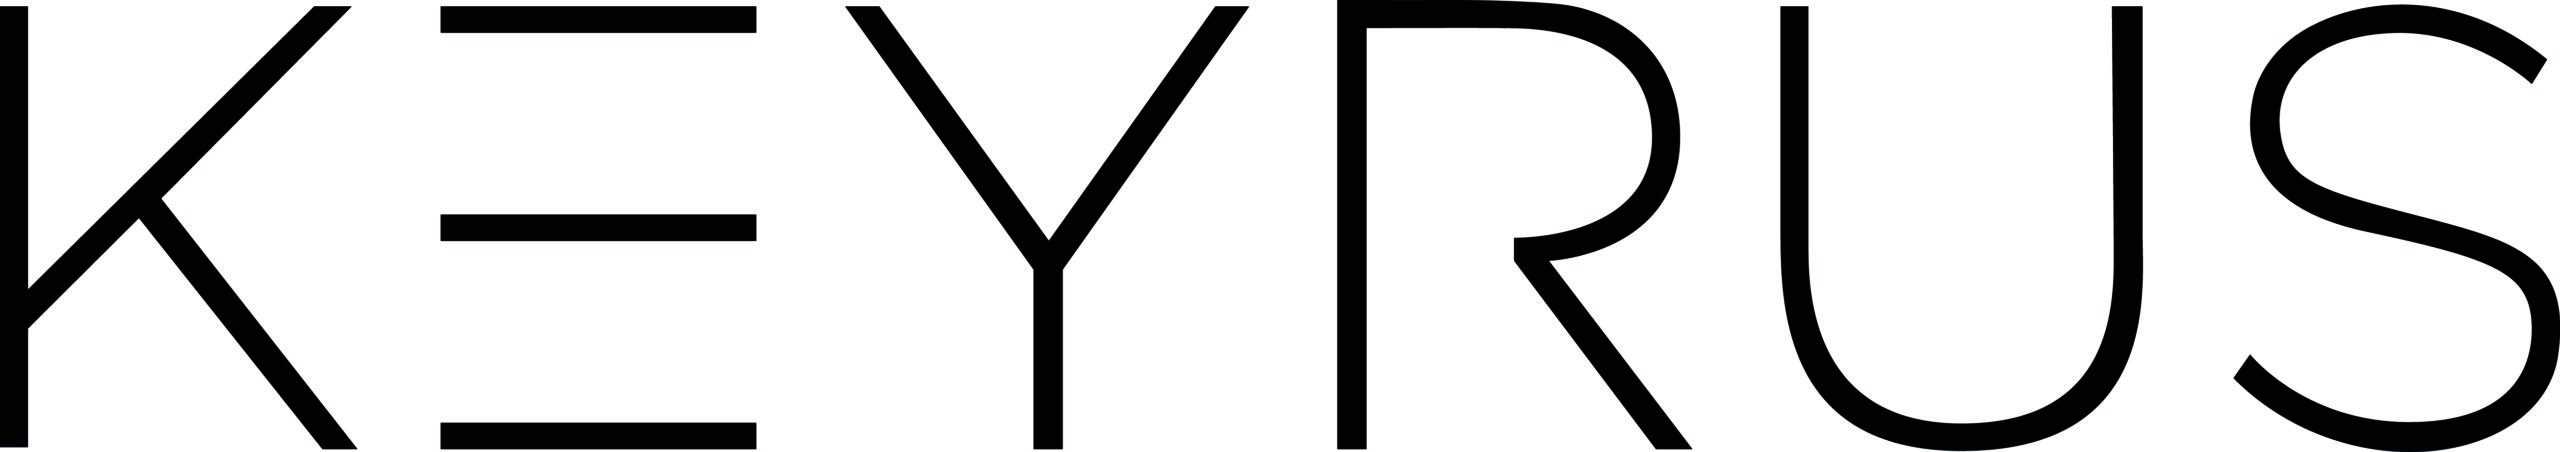 Keyrus